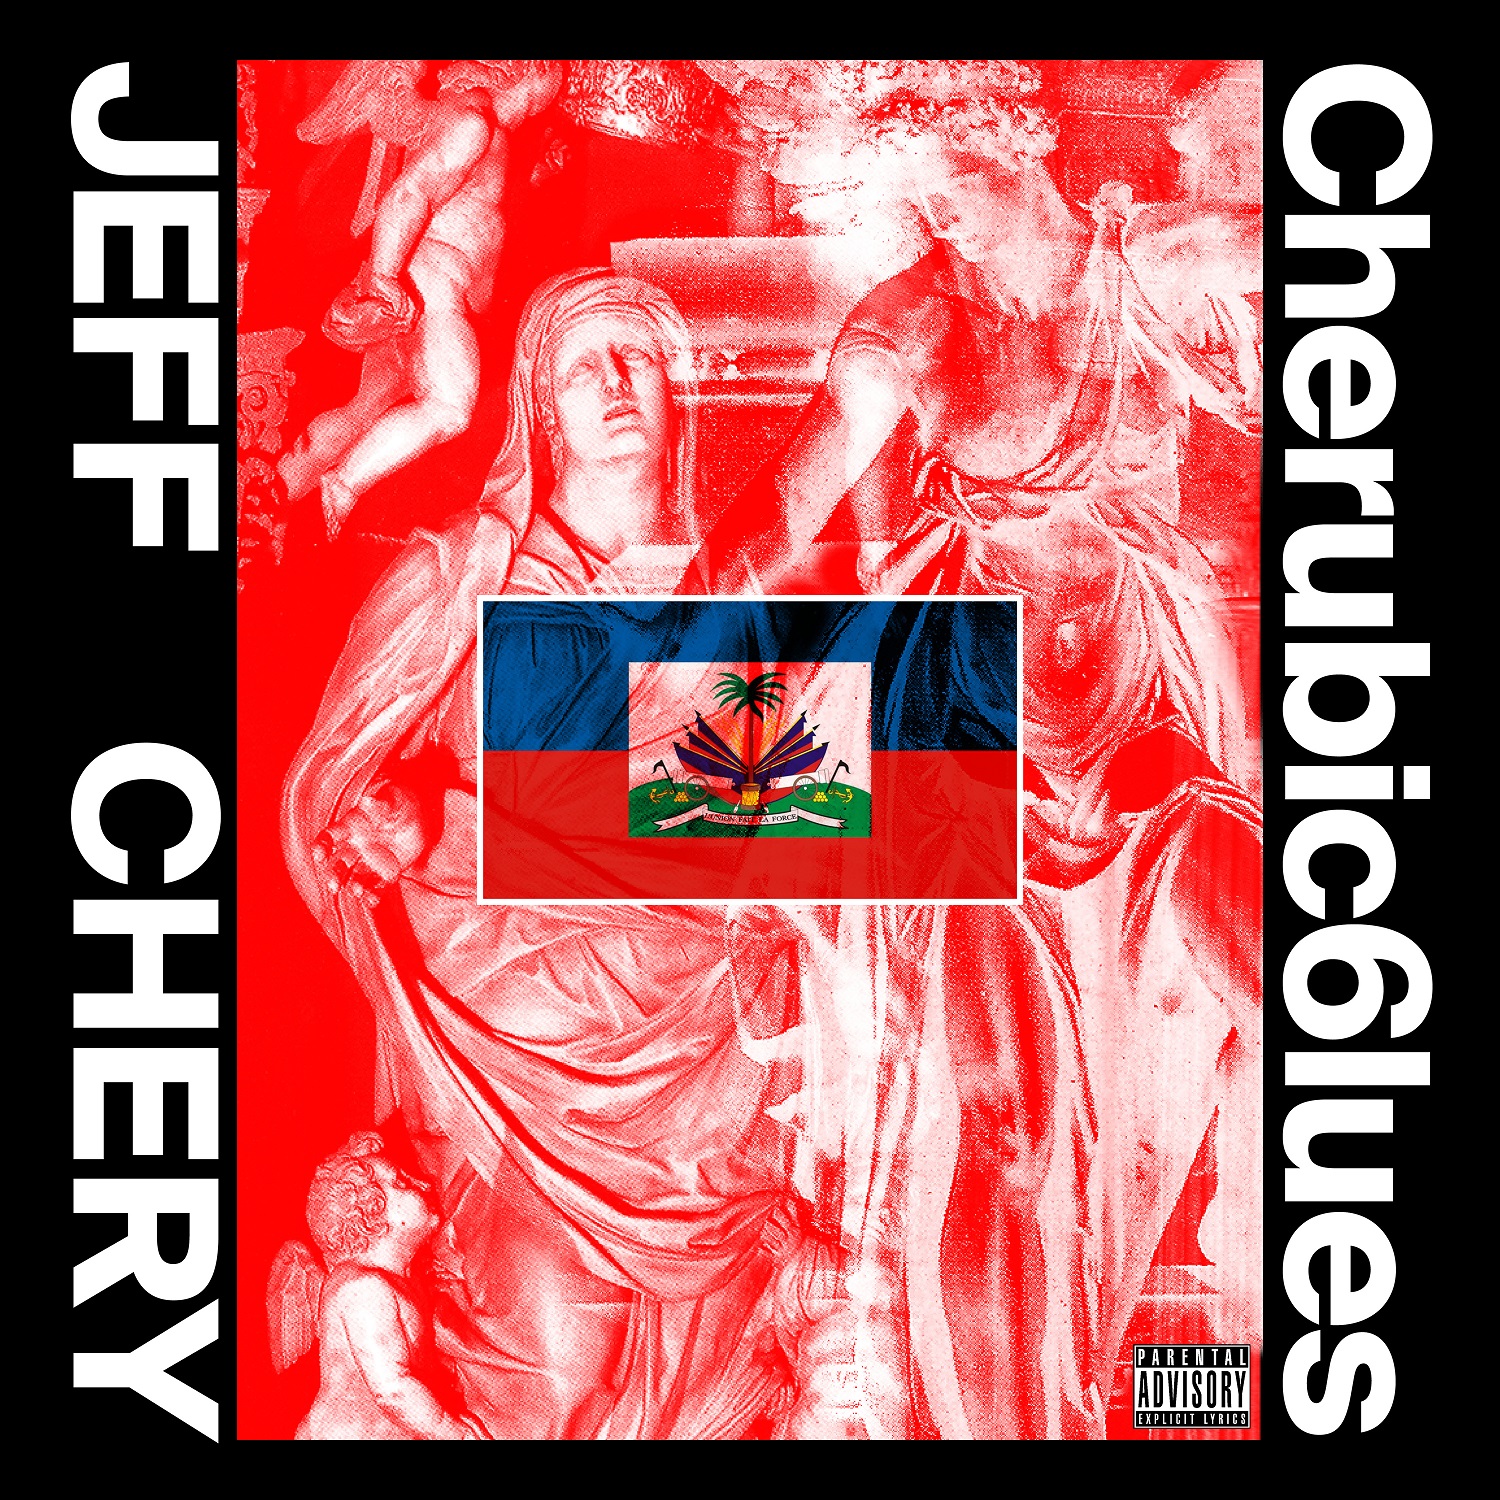 jeff-chery-cerubic-6lues